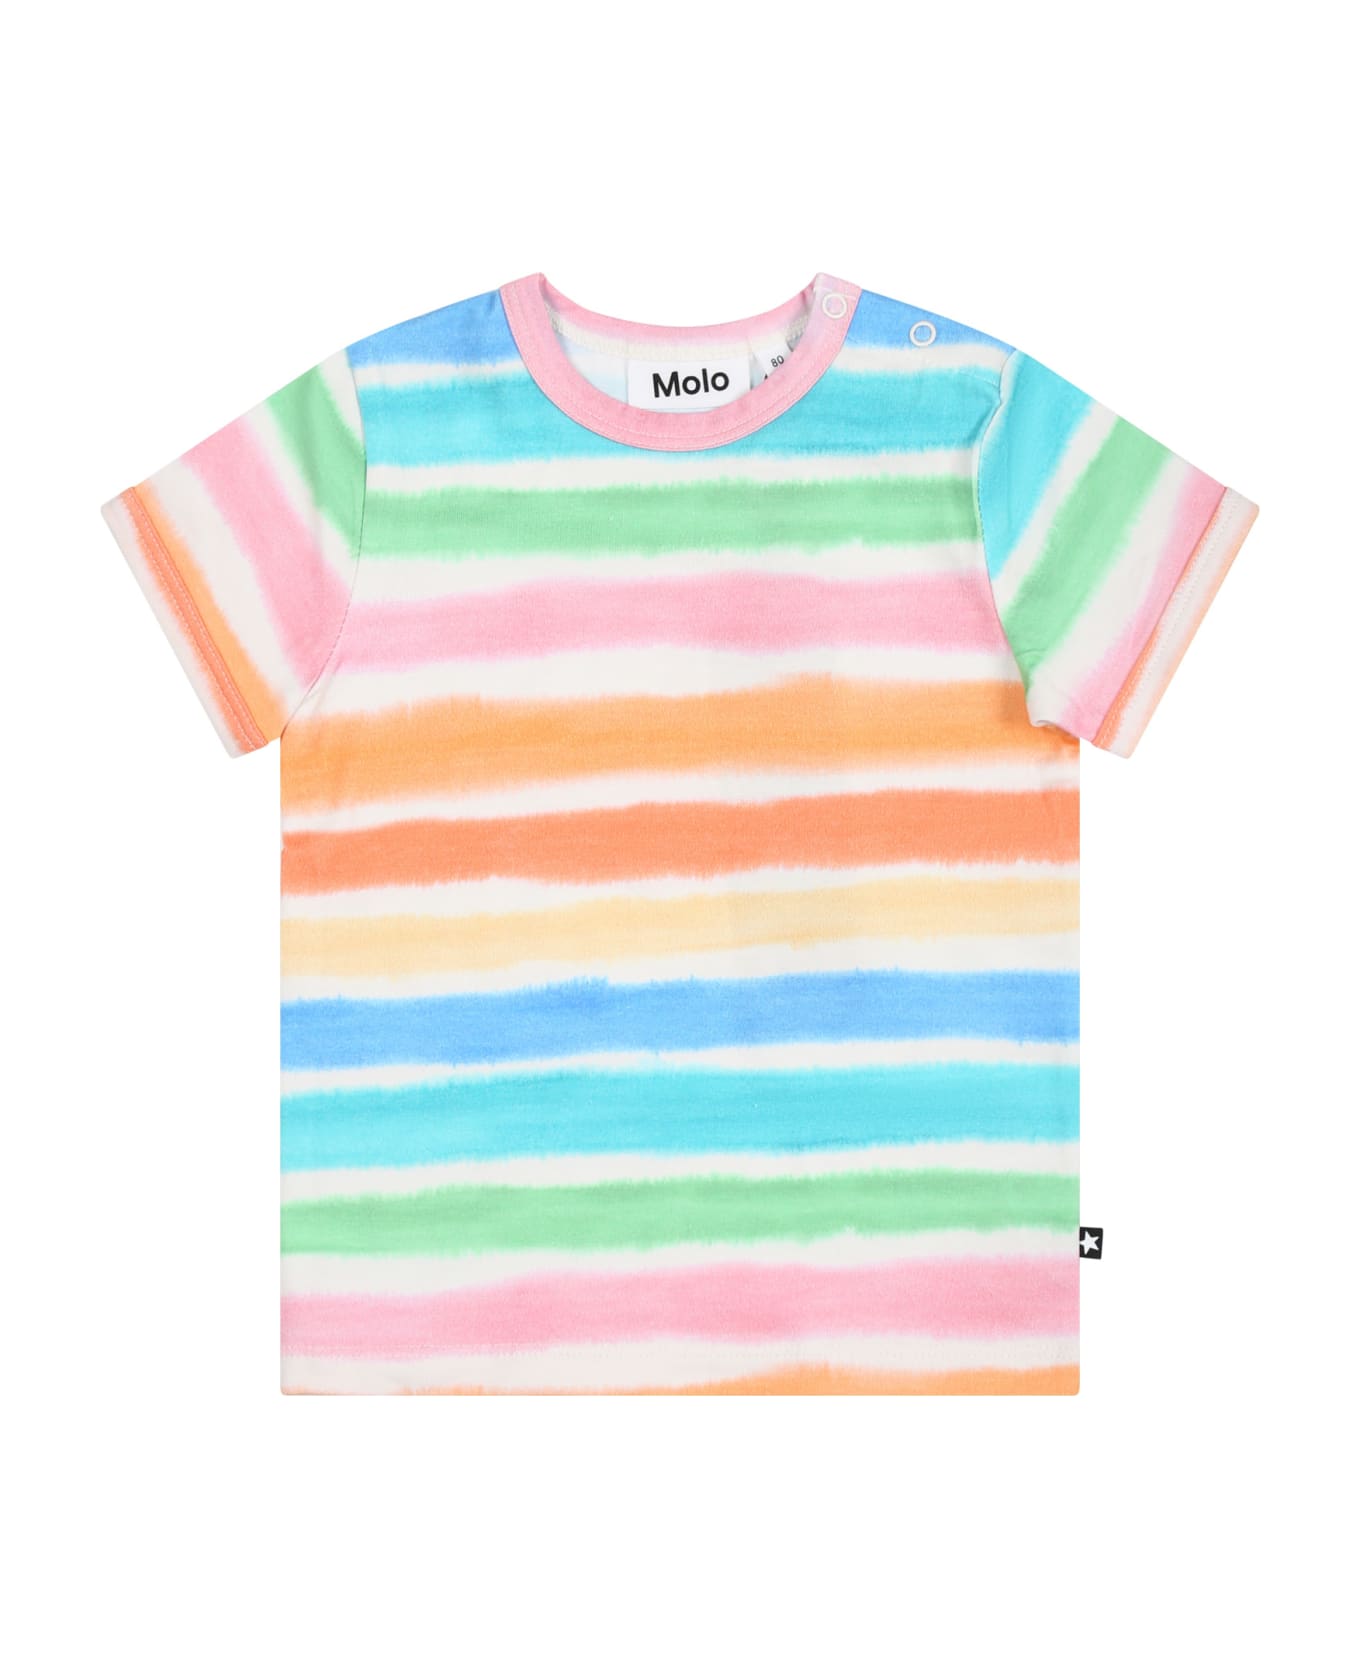 Molo Multicolor T-shirt For Baby Kids - Multicolor